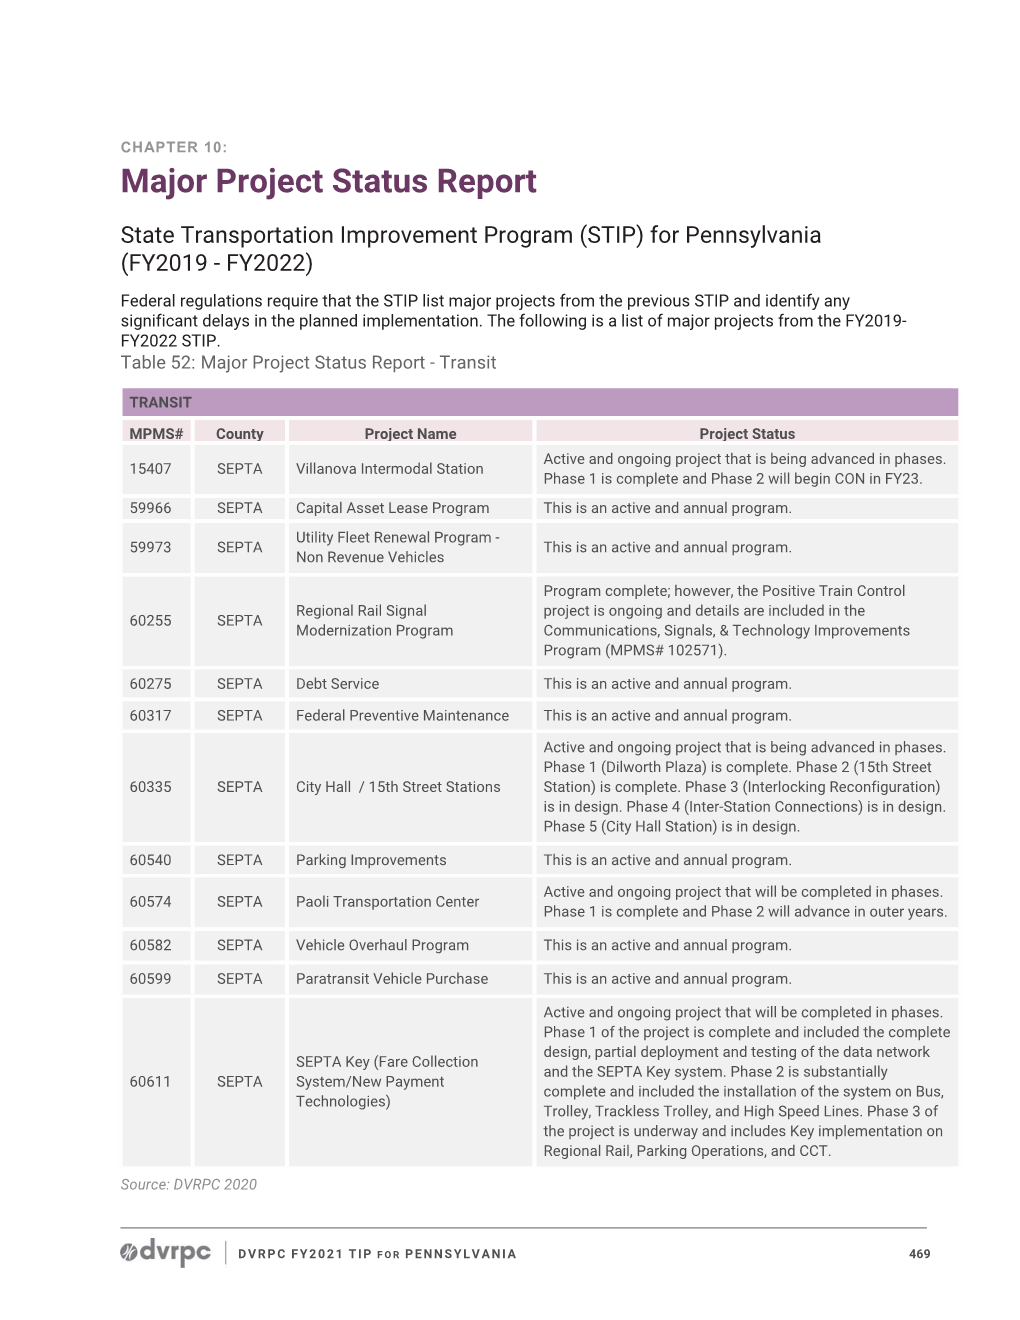 Major Project Status Report